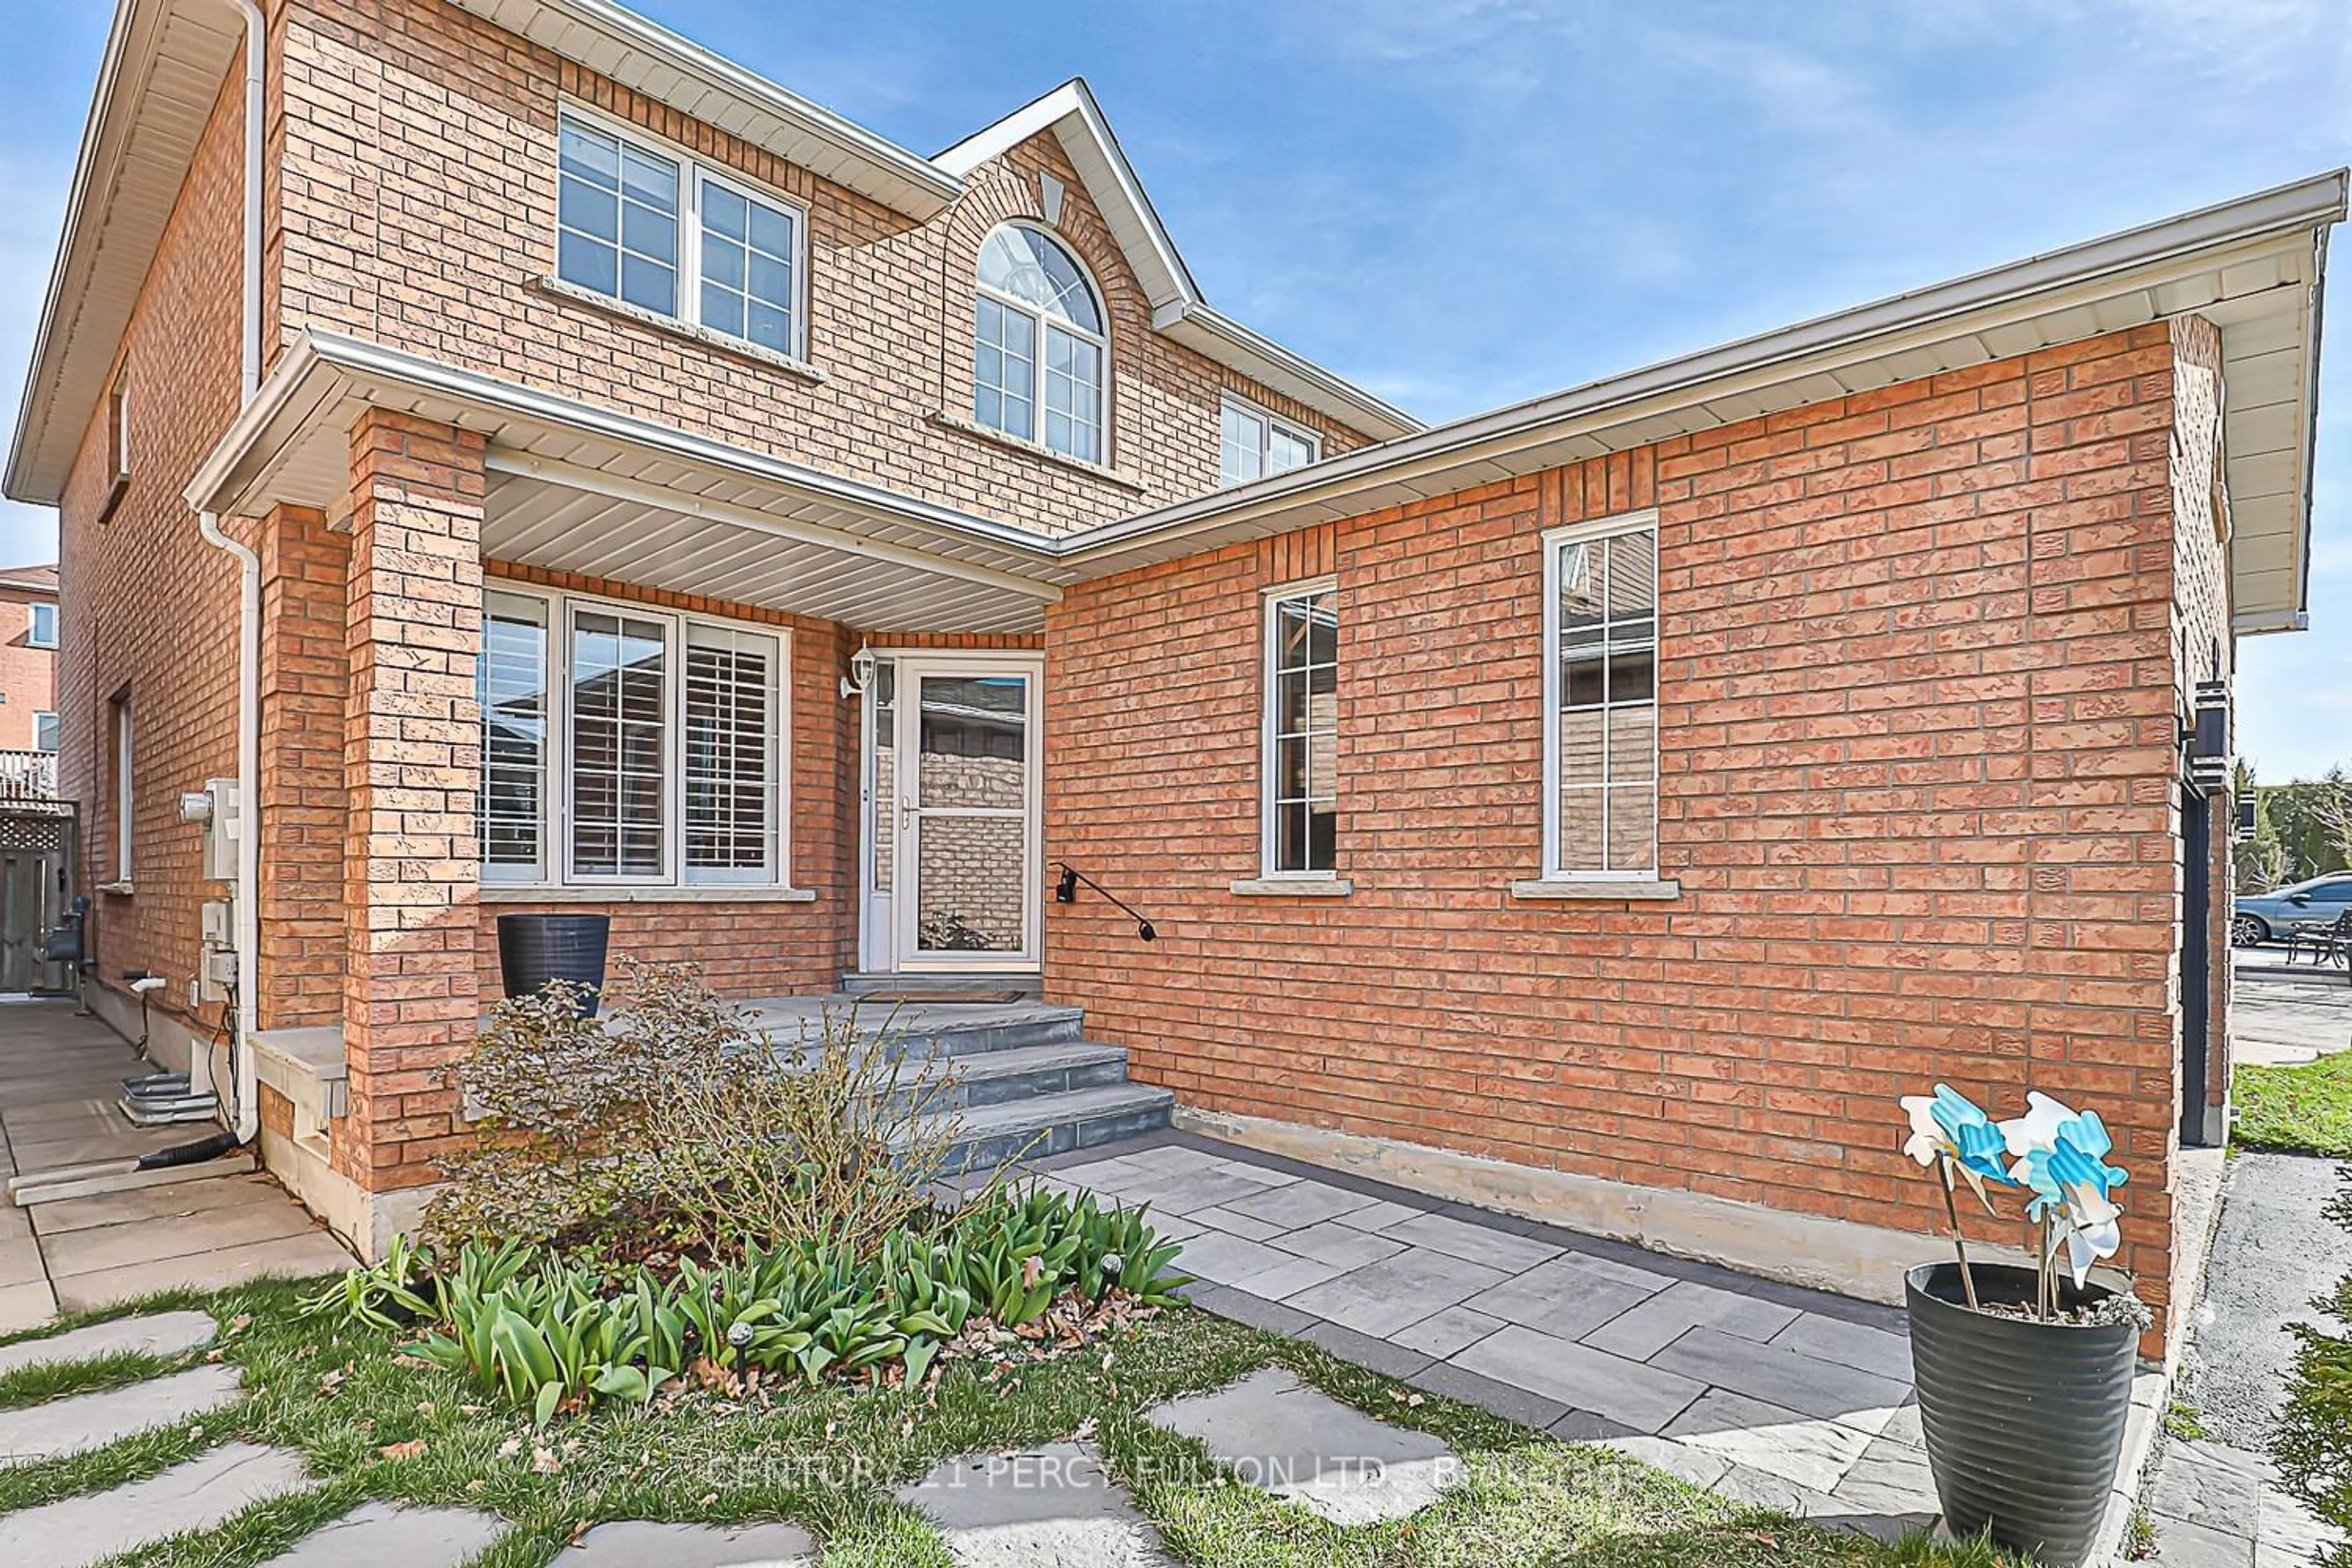 Home with brick exterior material for 151 Rosanna Cres, Vaughan Ontario L6A 3E4